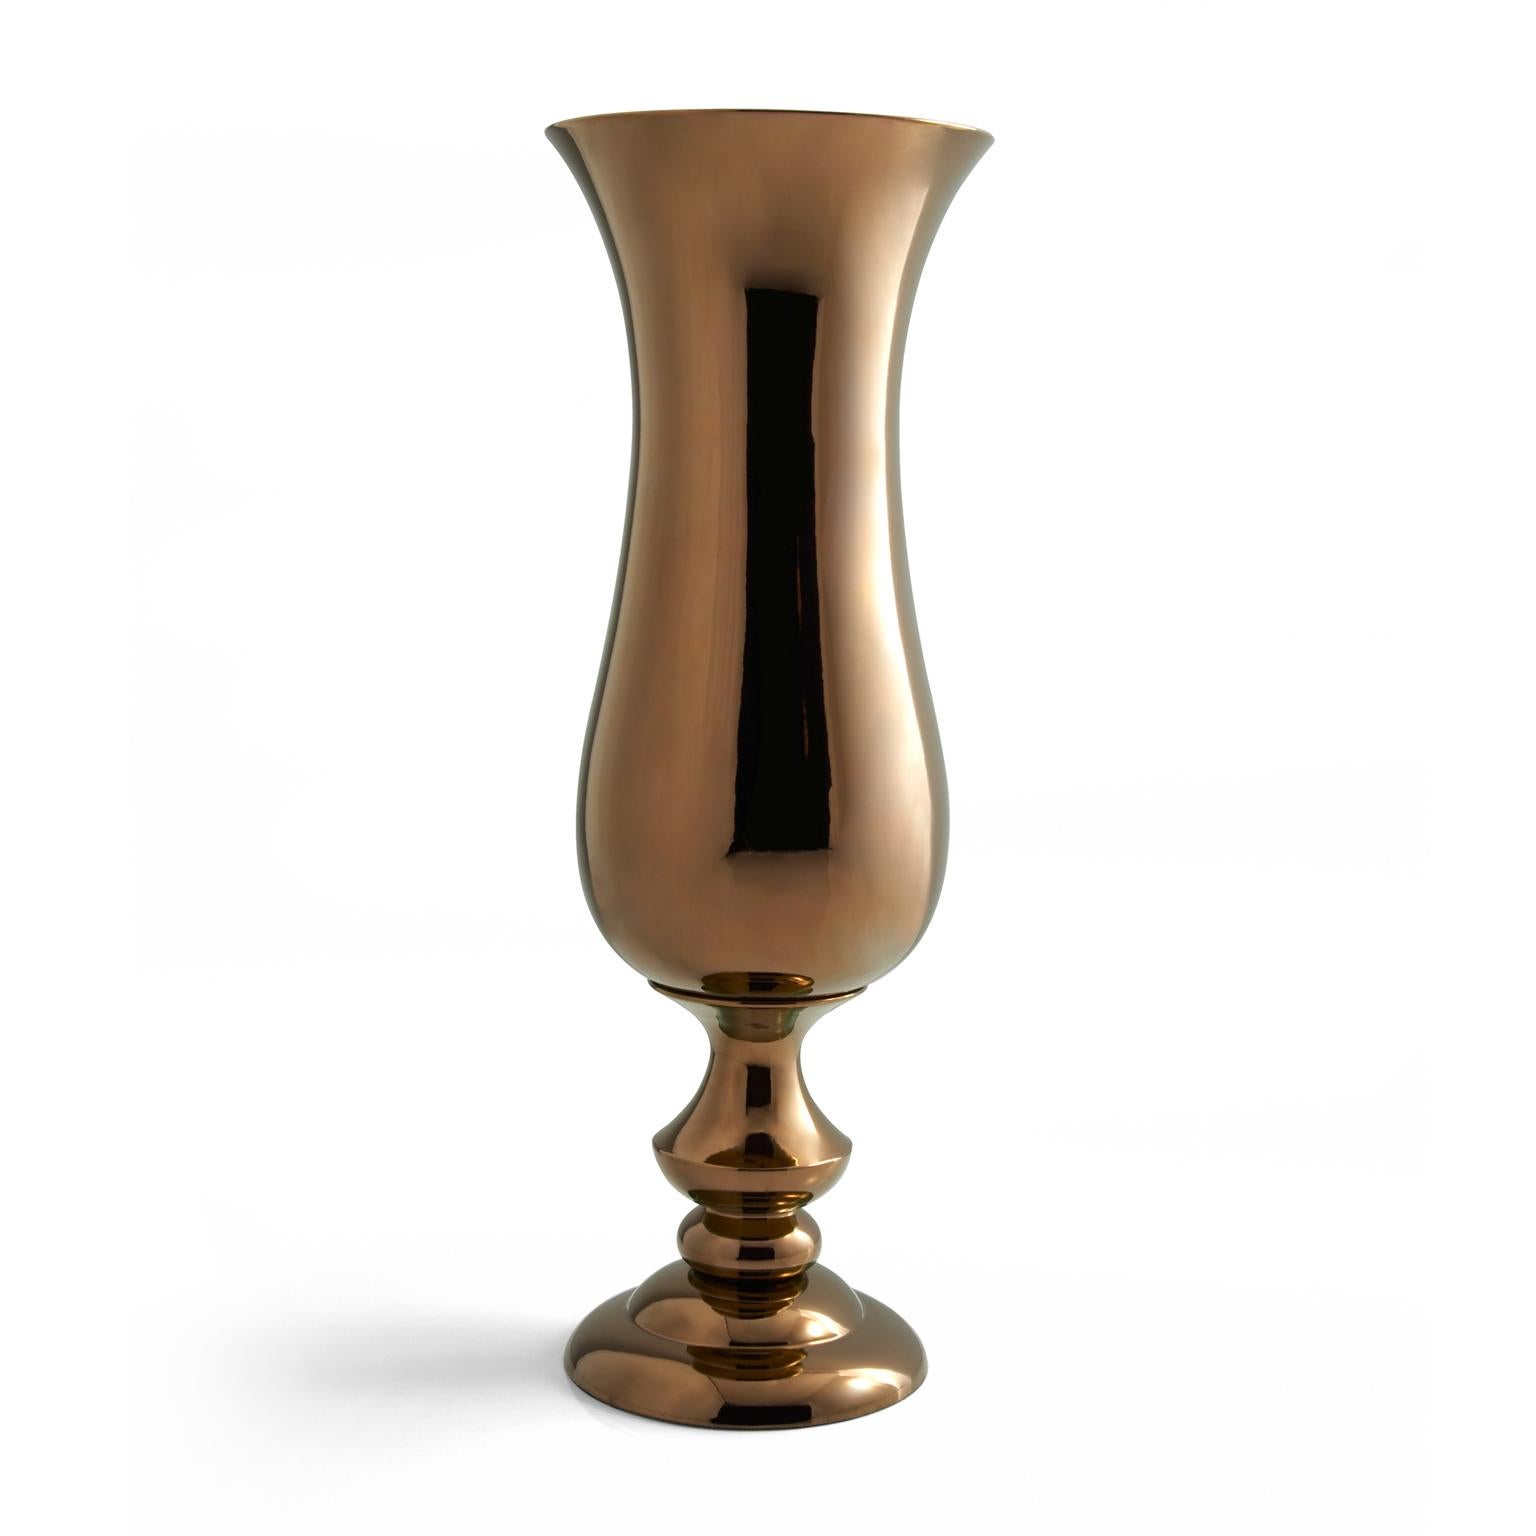 DIANA - Ceramic vase fully handcrafted in bronze

code CP003, measures: 
height 130.0 cm., diameter 40.0 cm.